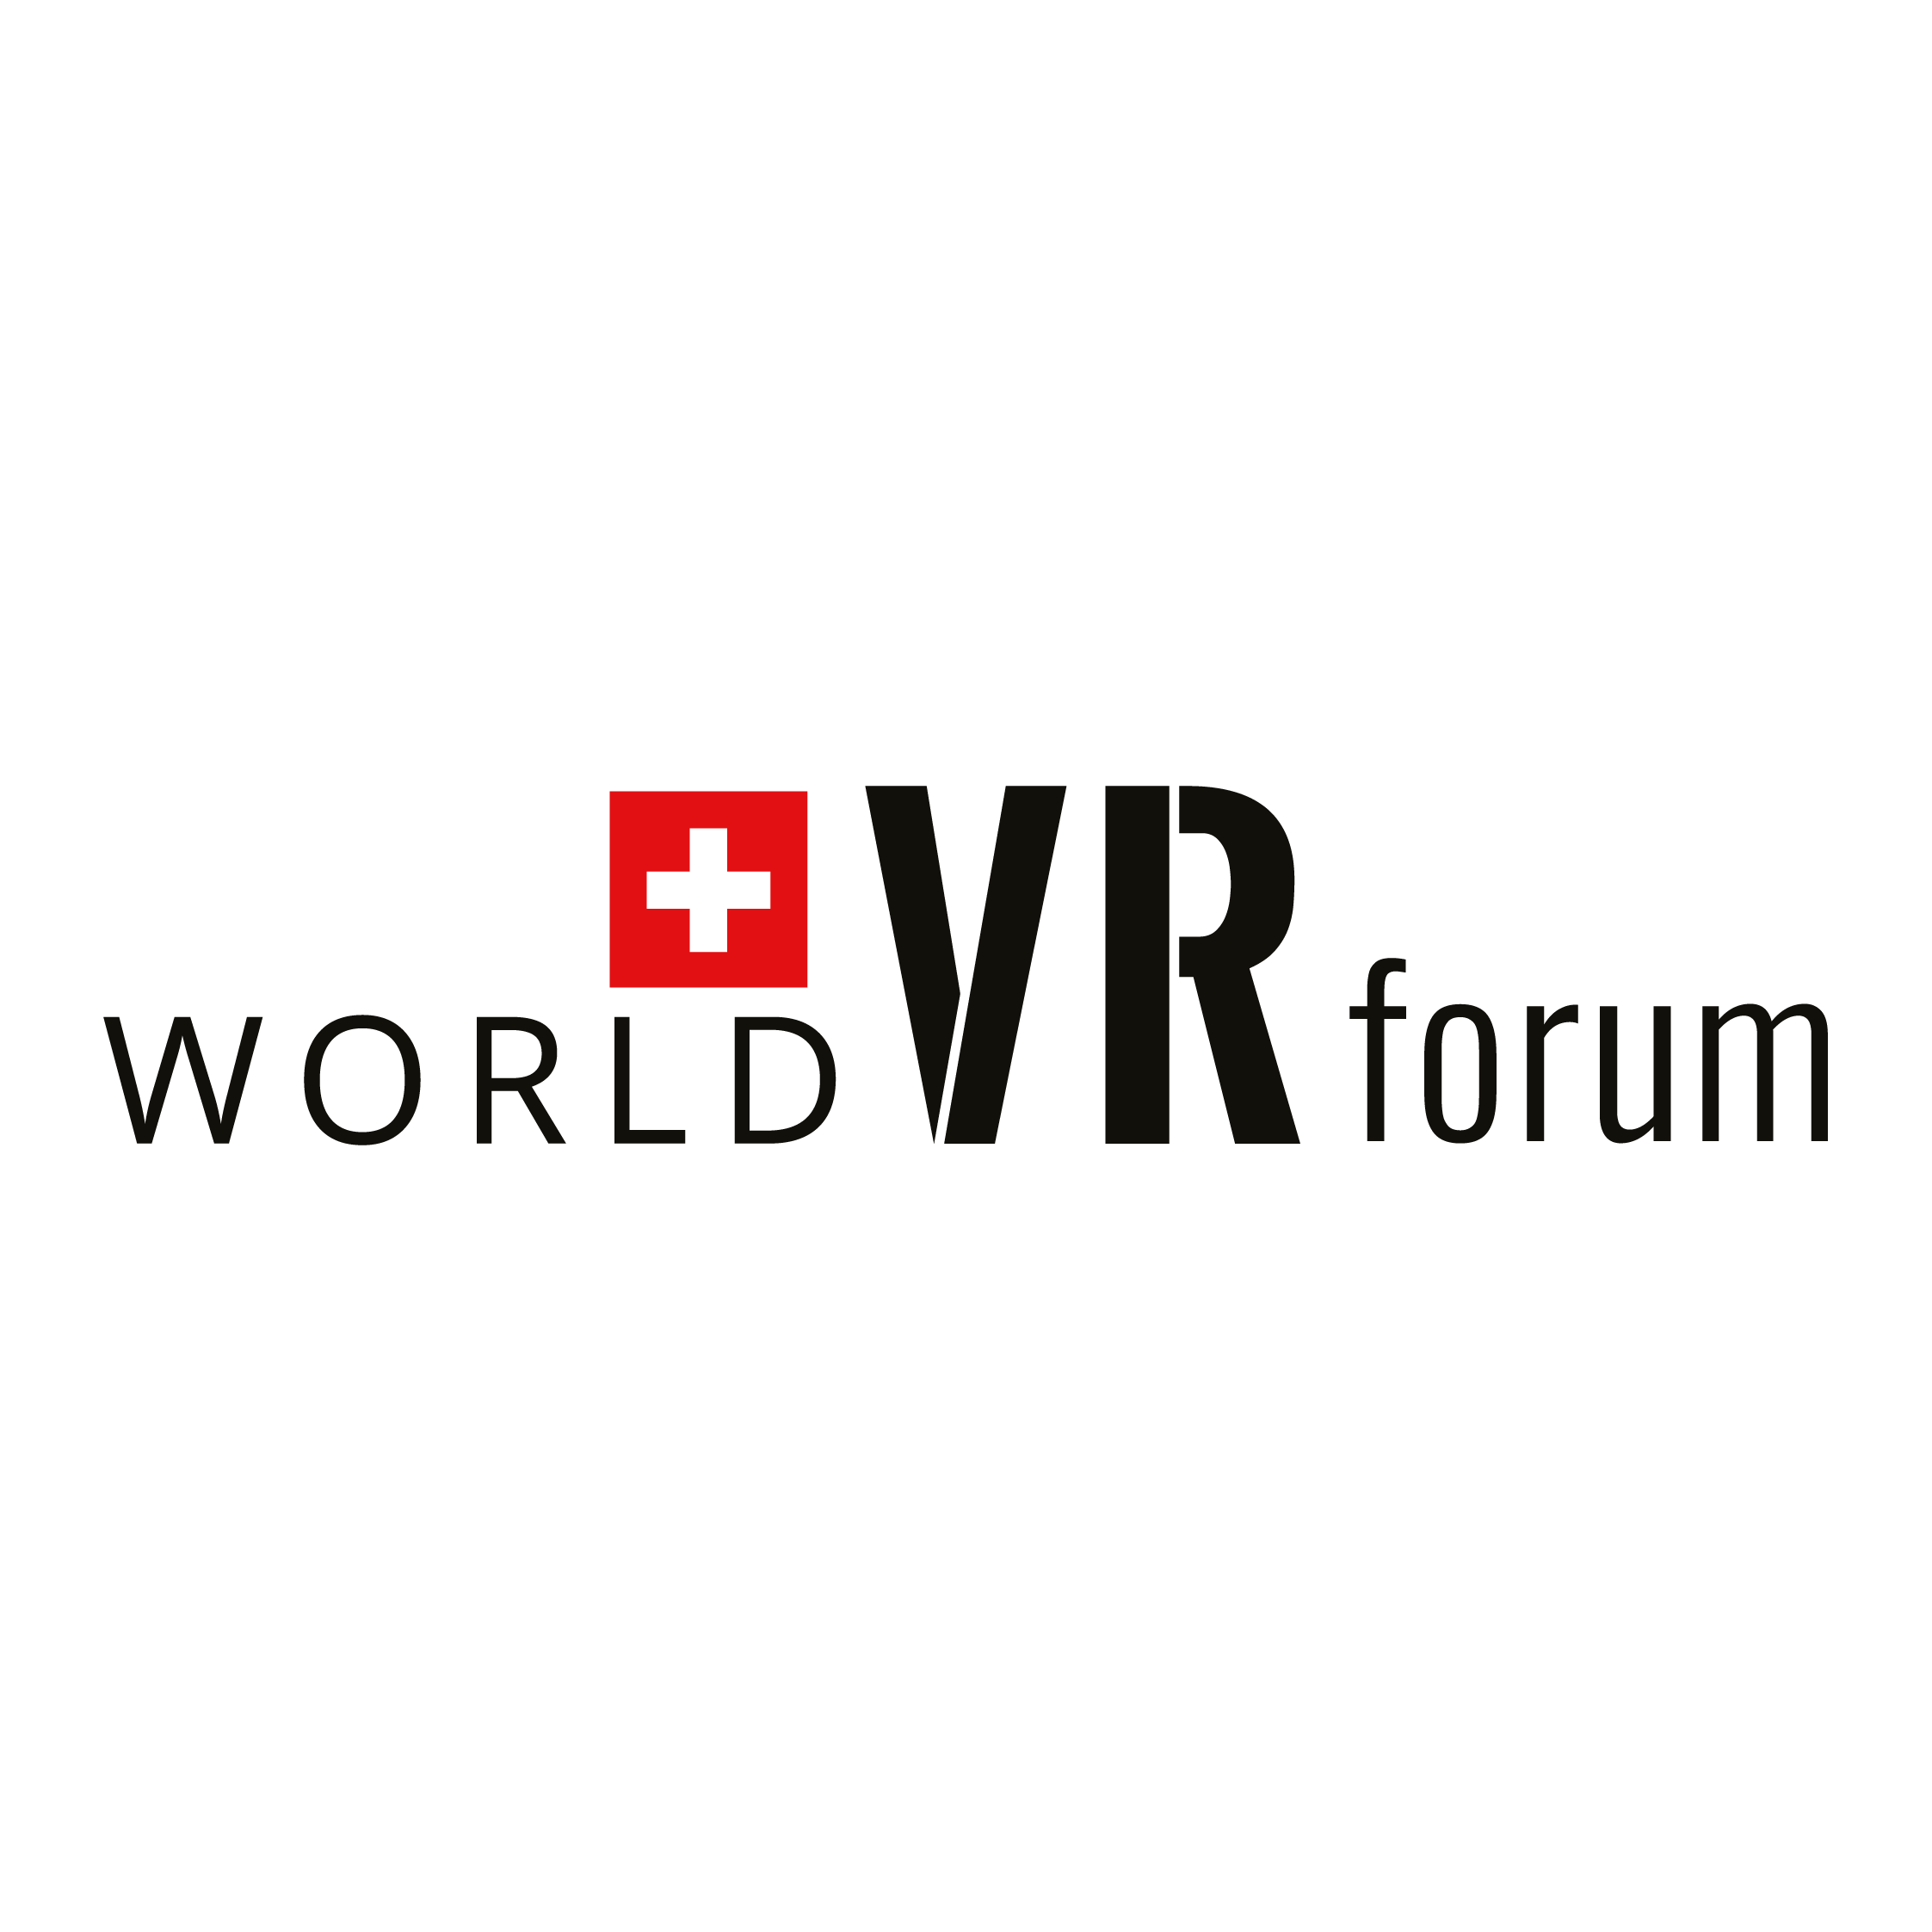 world vr forum logo